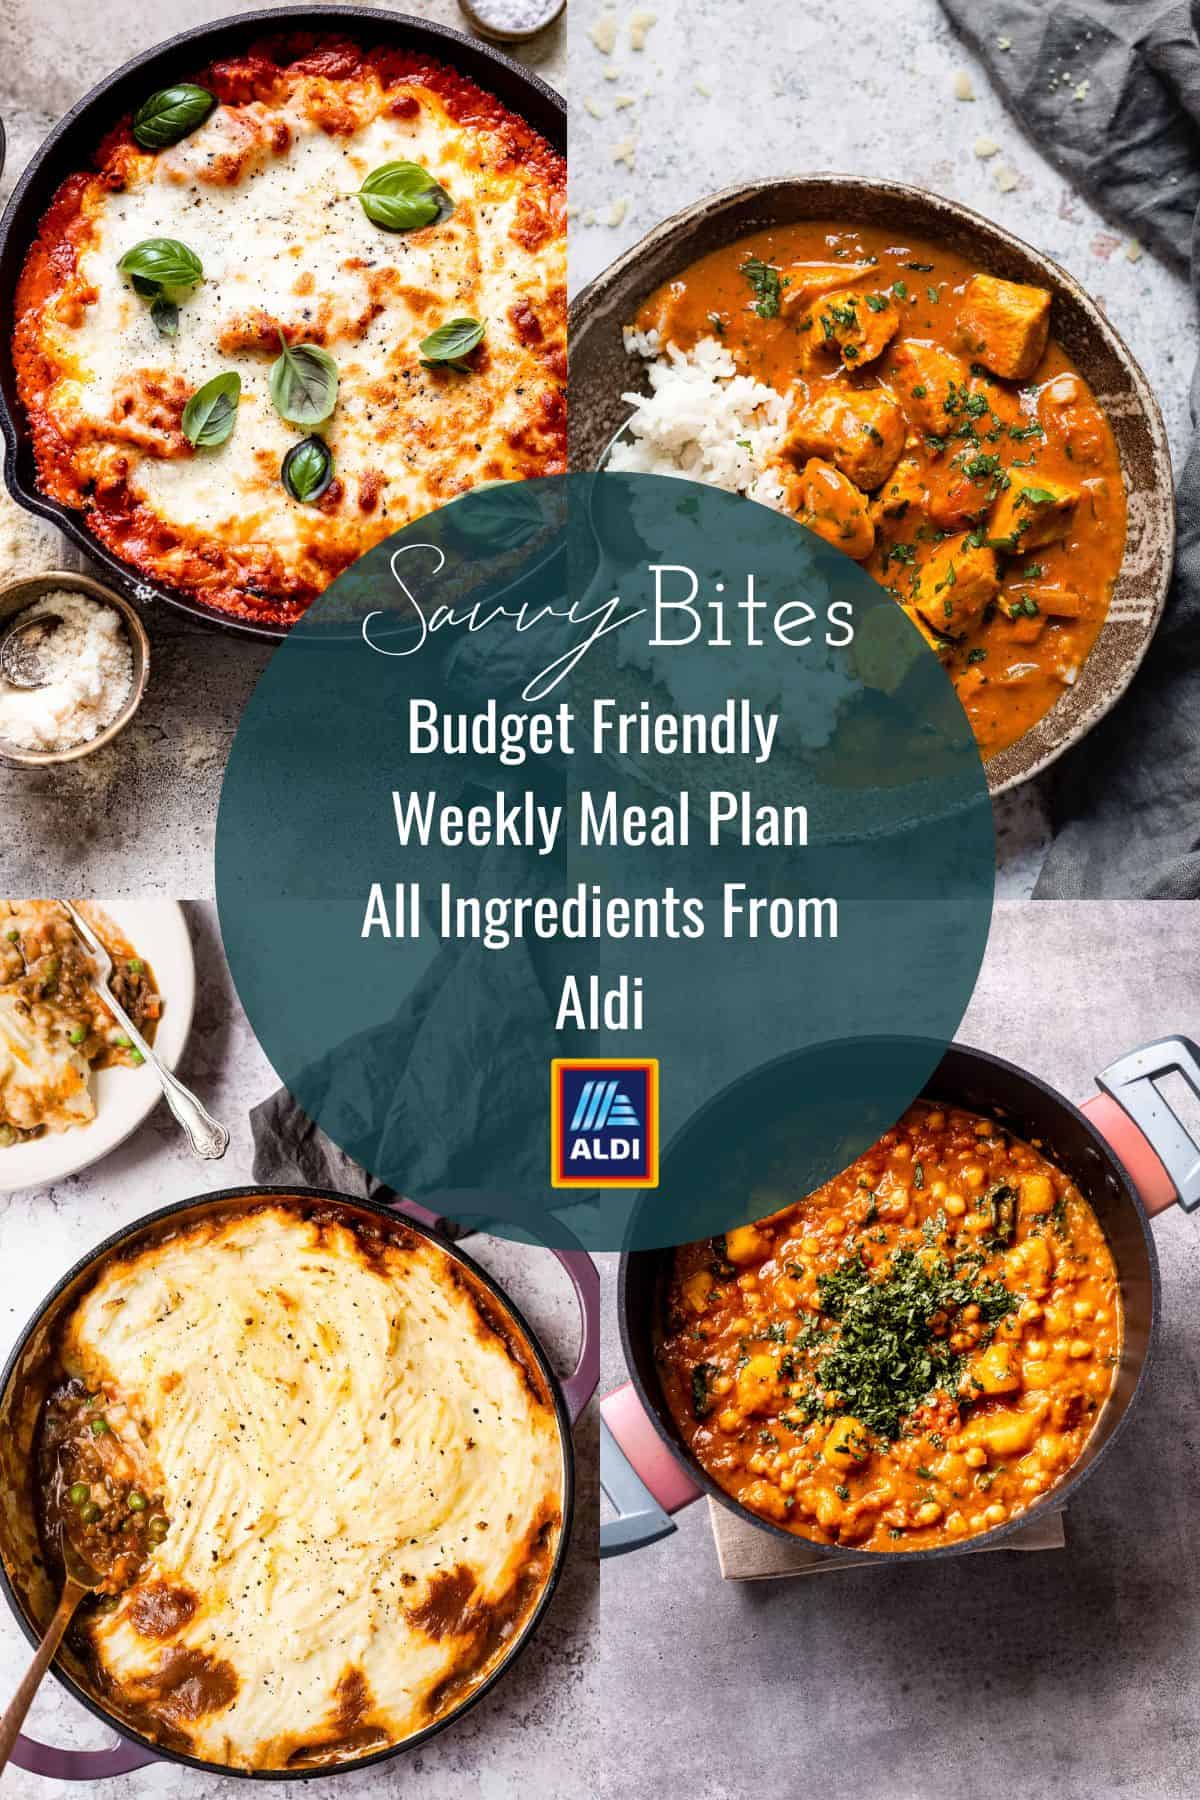 Weekly budget meal plan using Aldi ingredients.